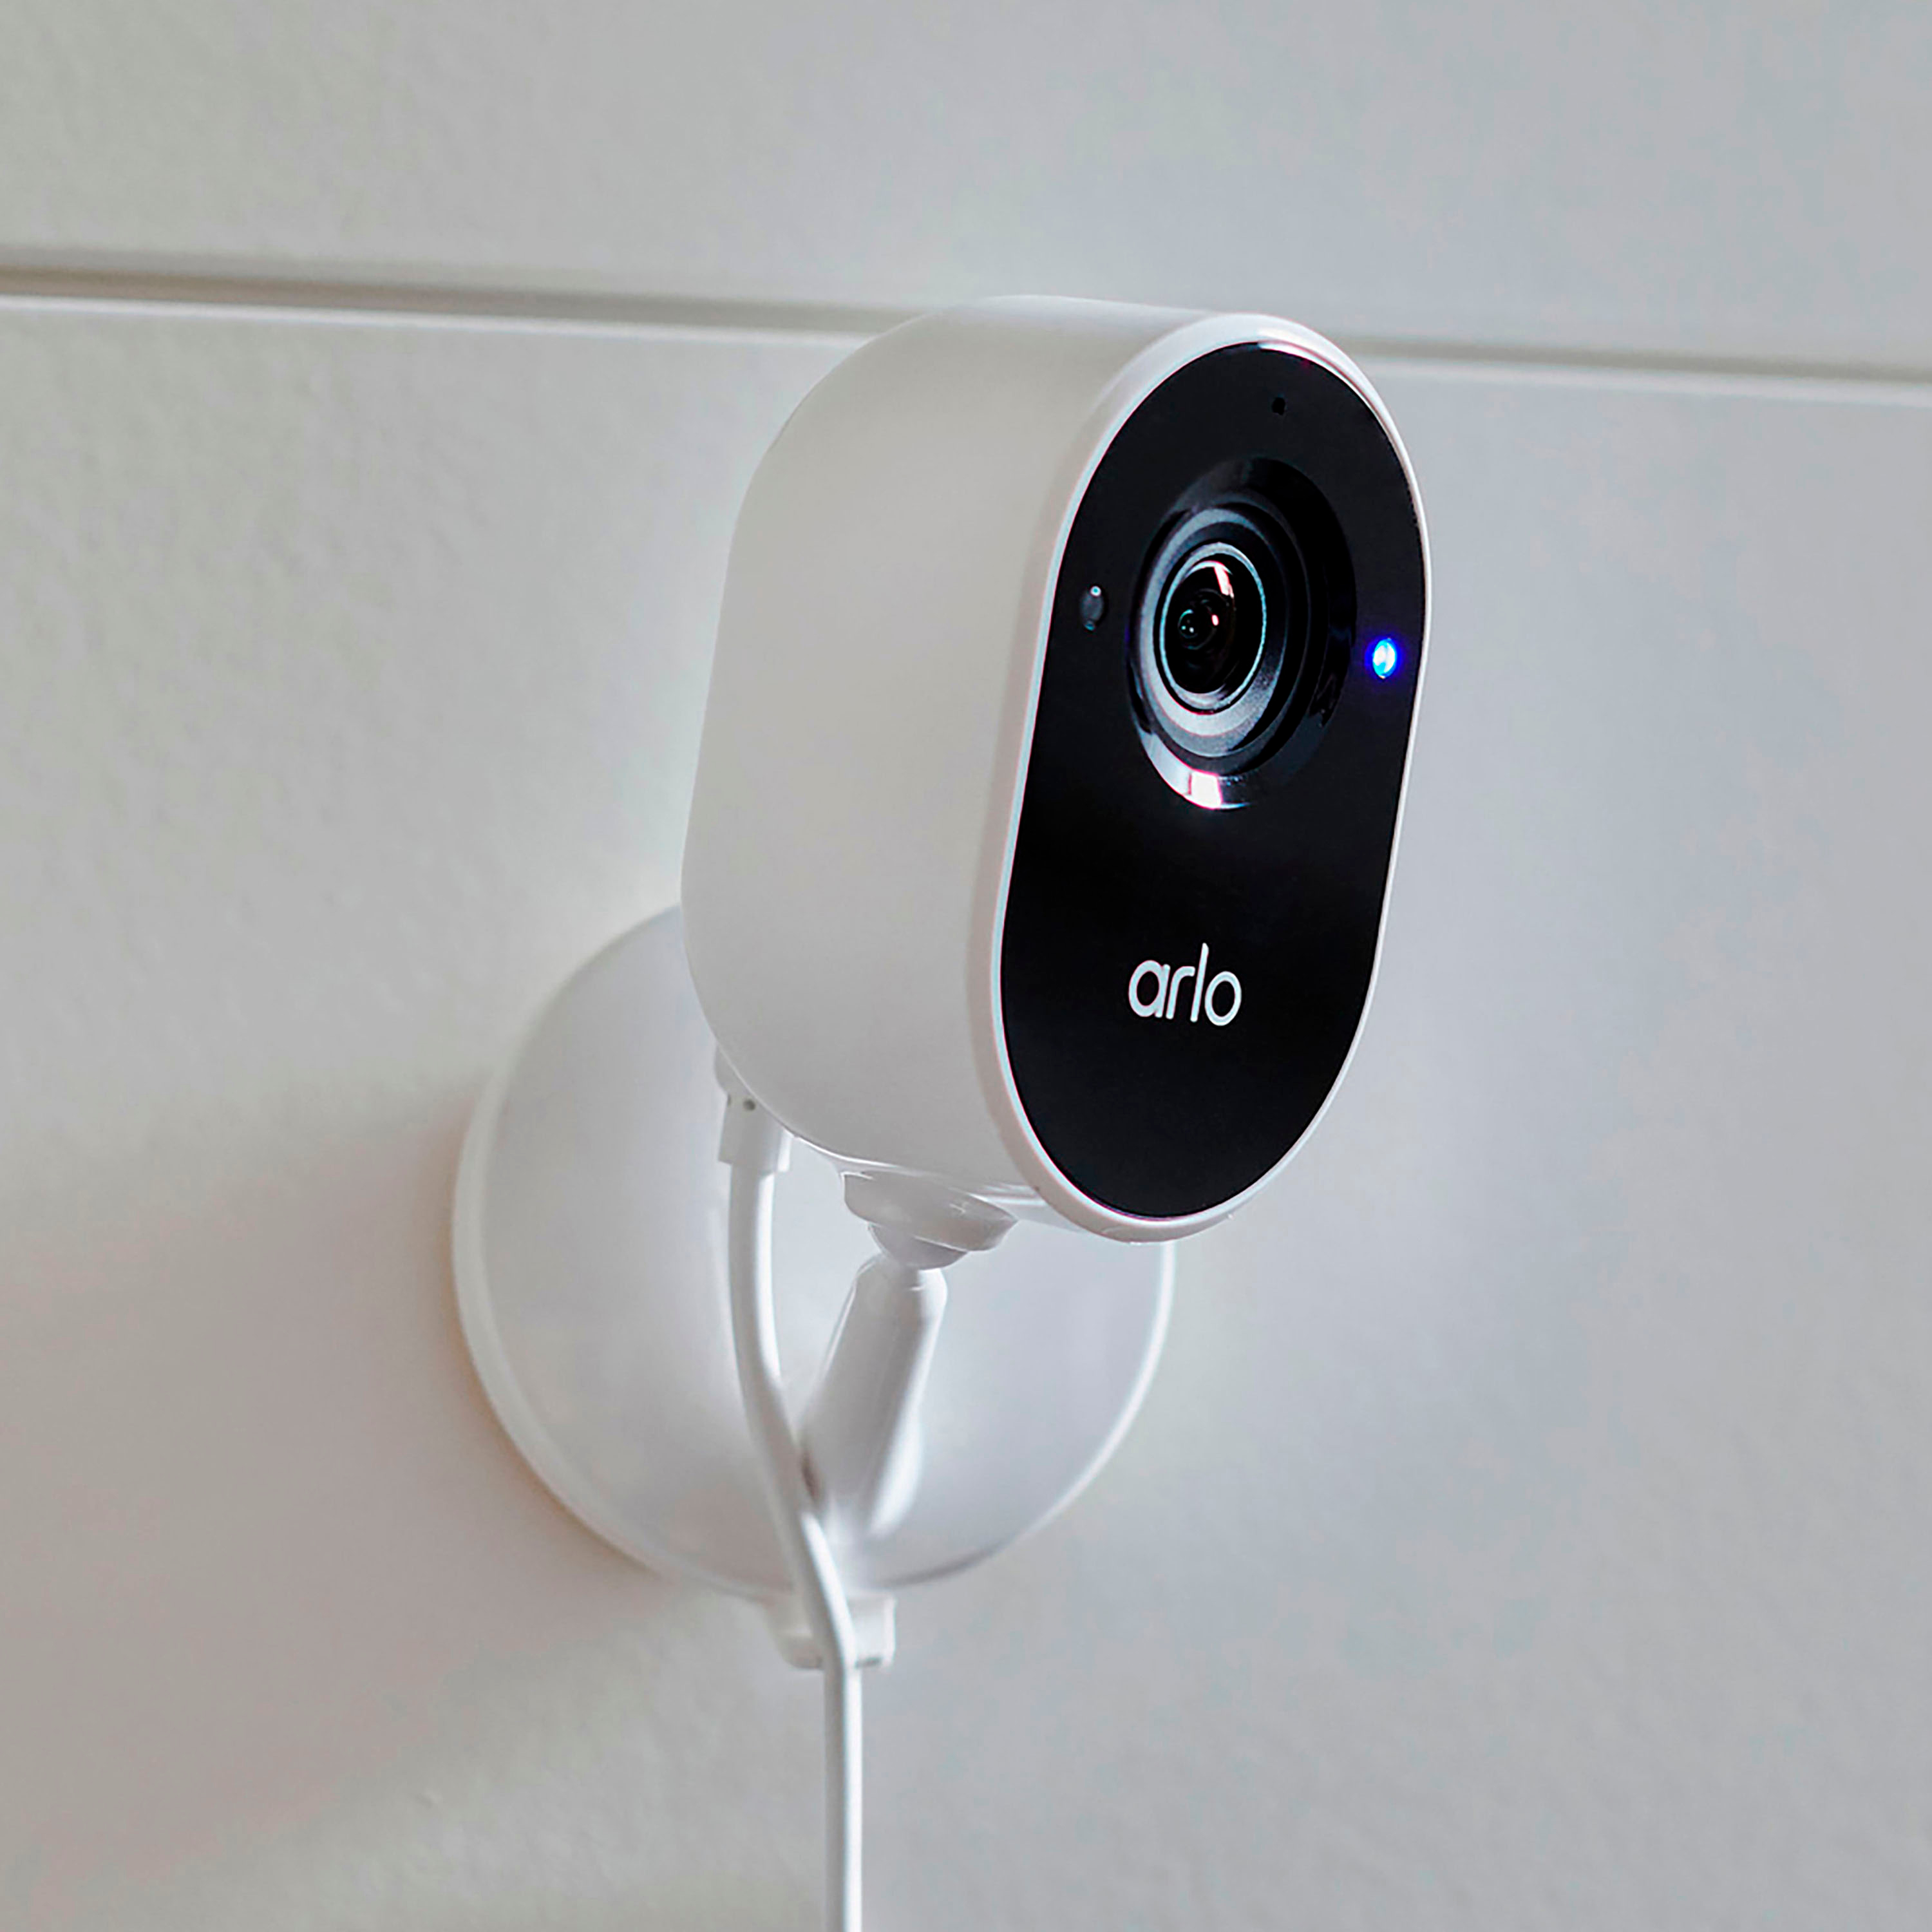 Arlo Essential Indoor Security Camera Review